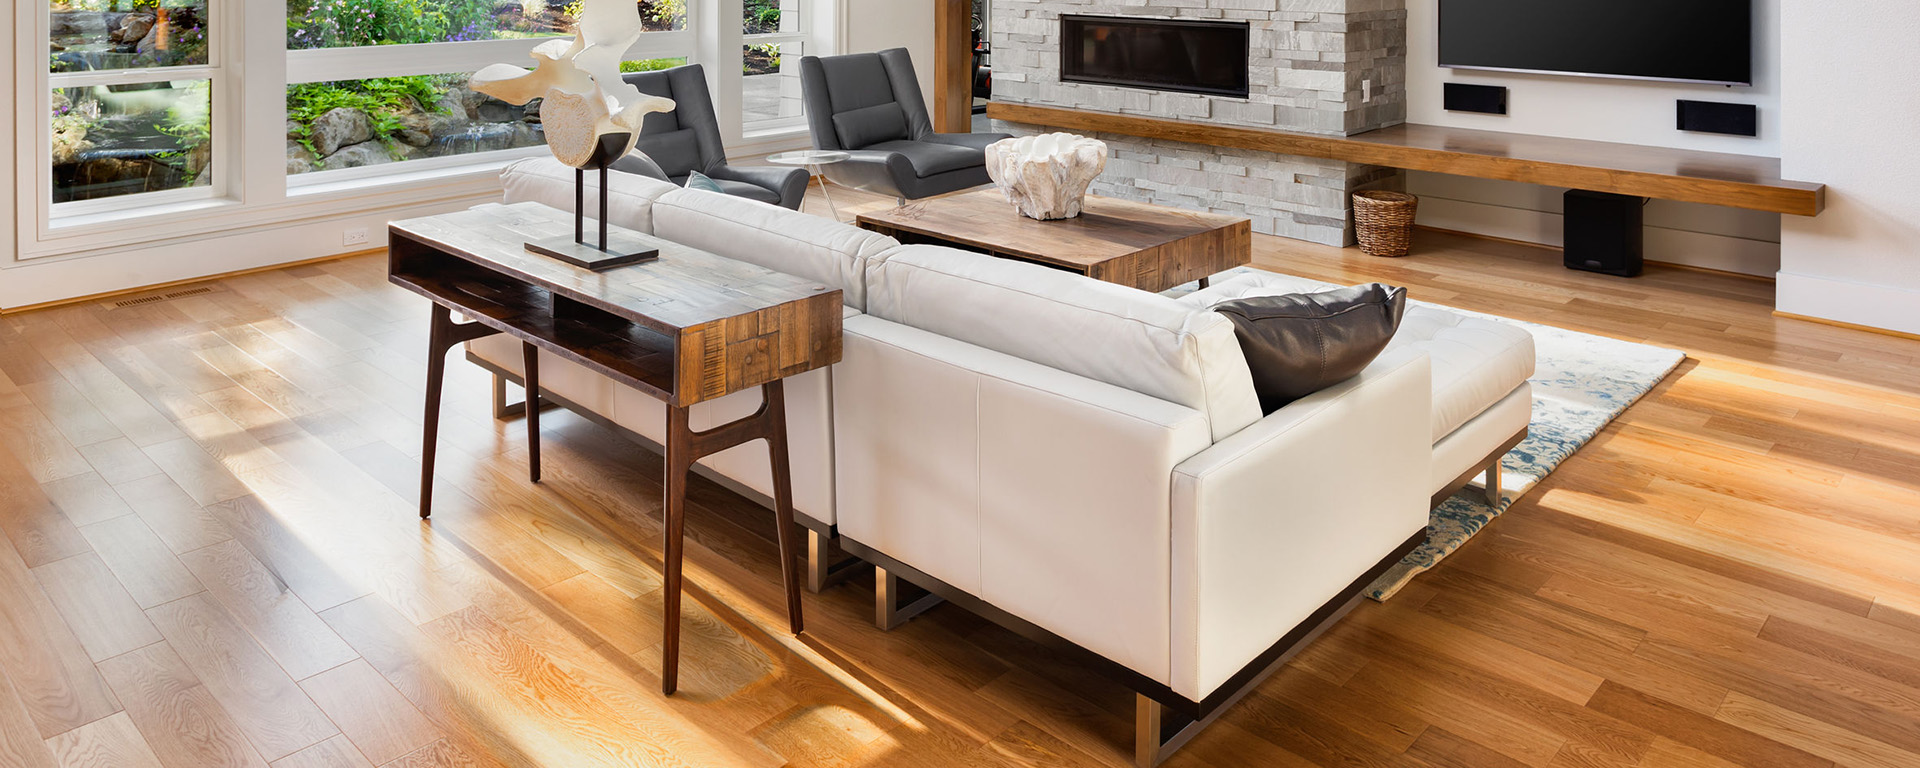 Hardwood floor in modern living room 